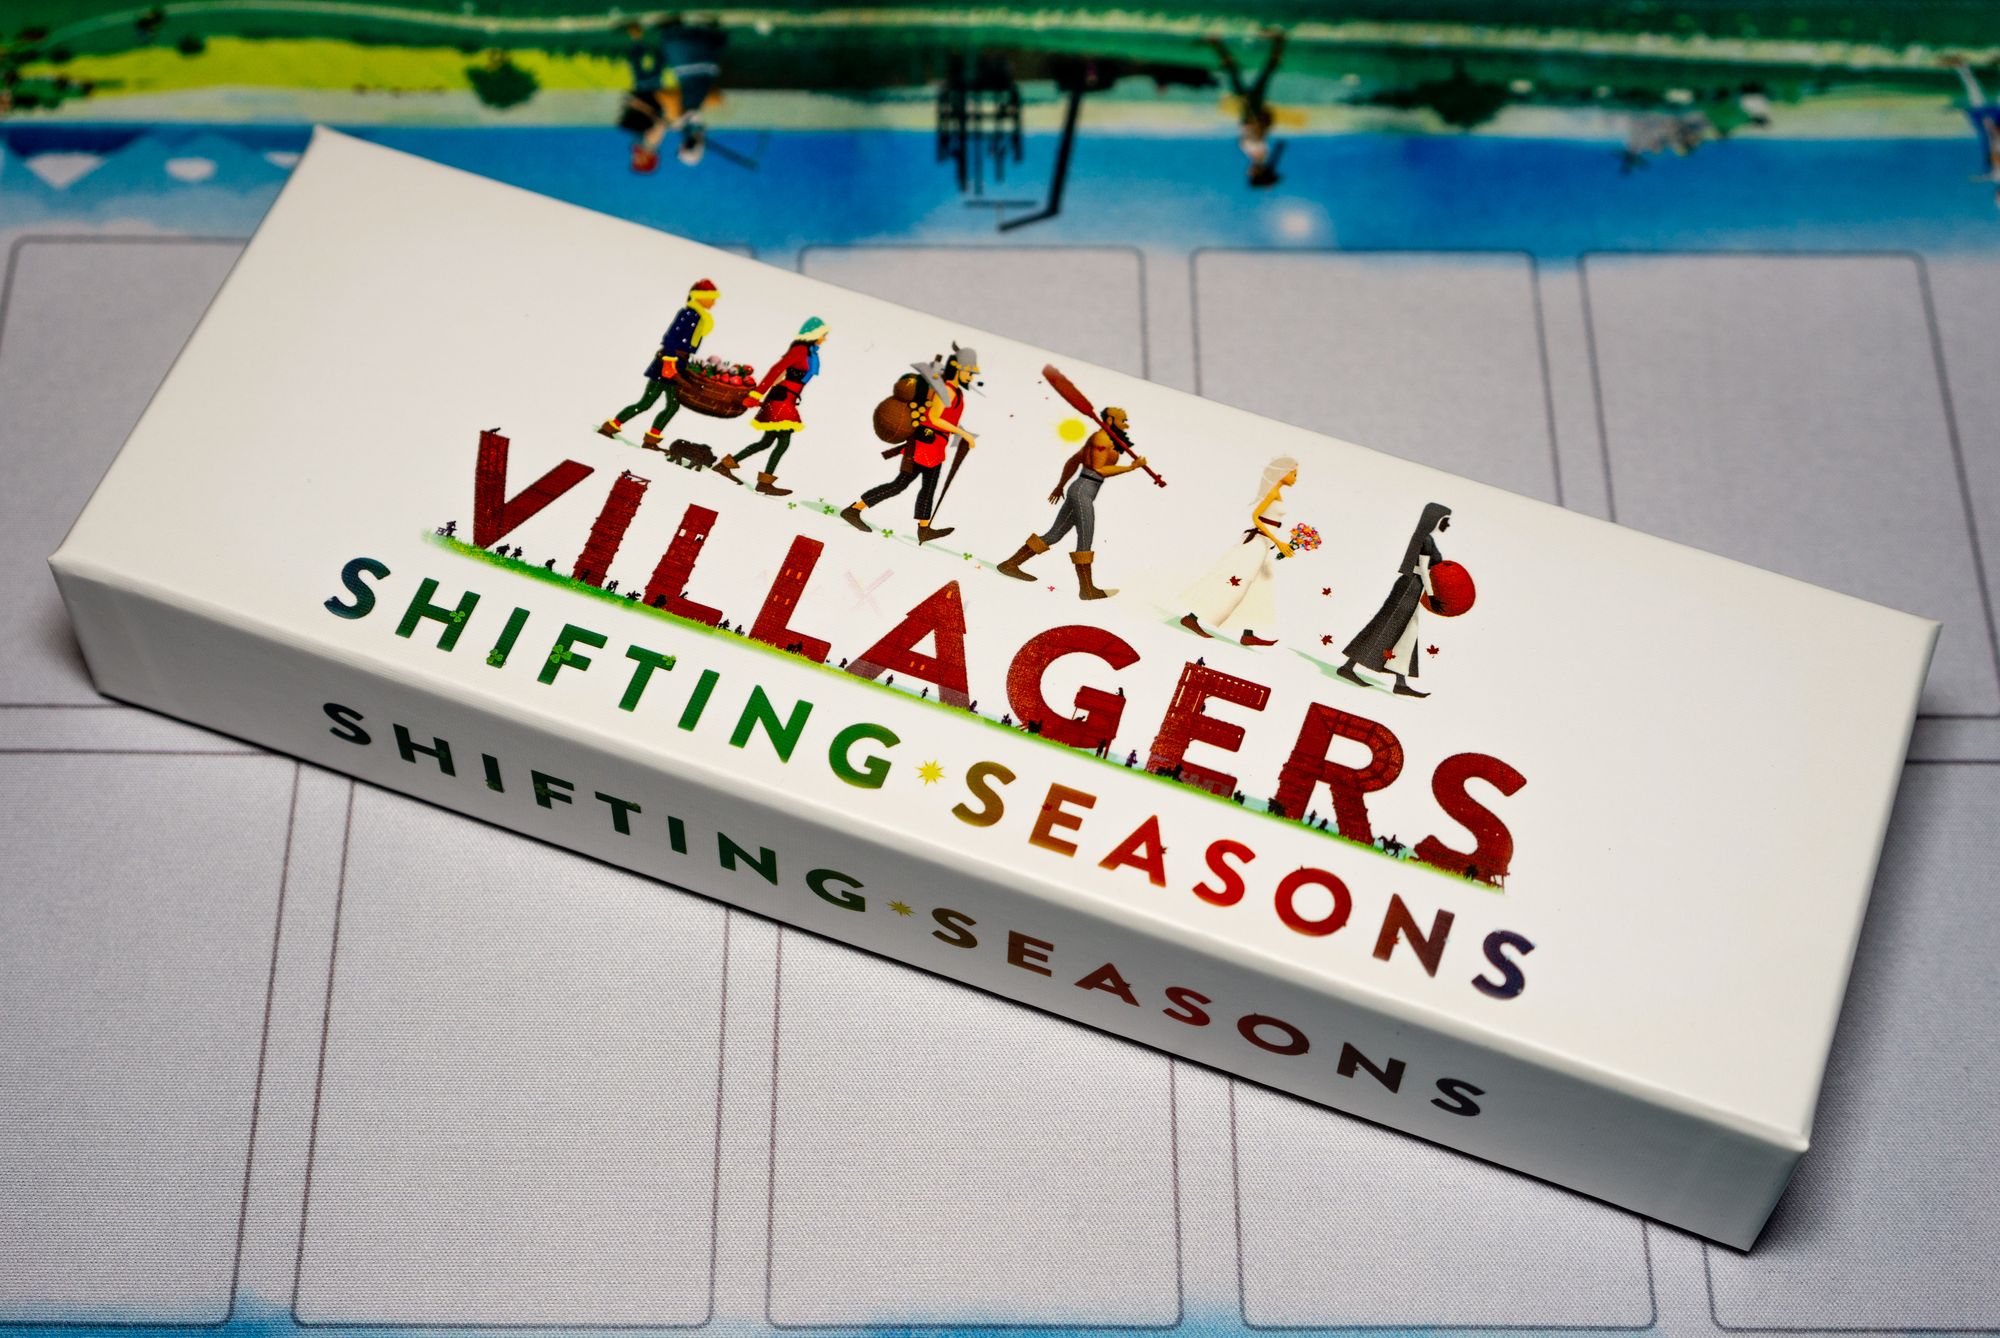 Review: Villagers Shifting Seasons